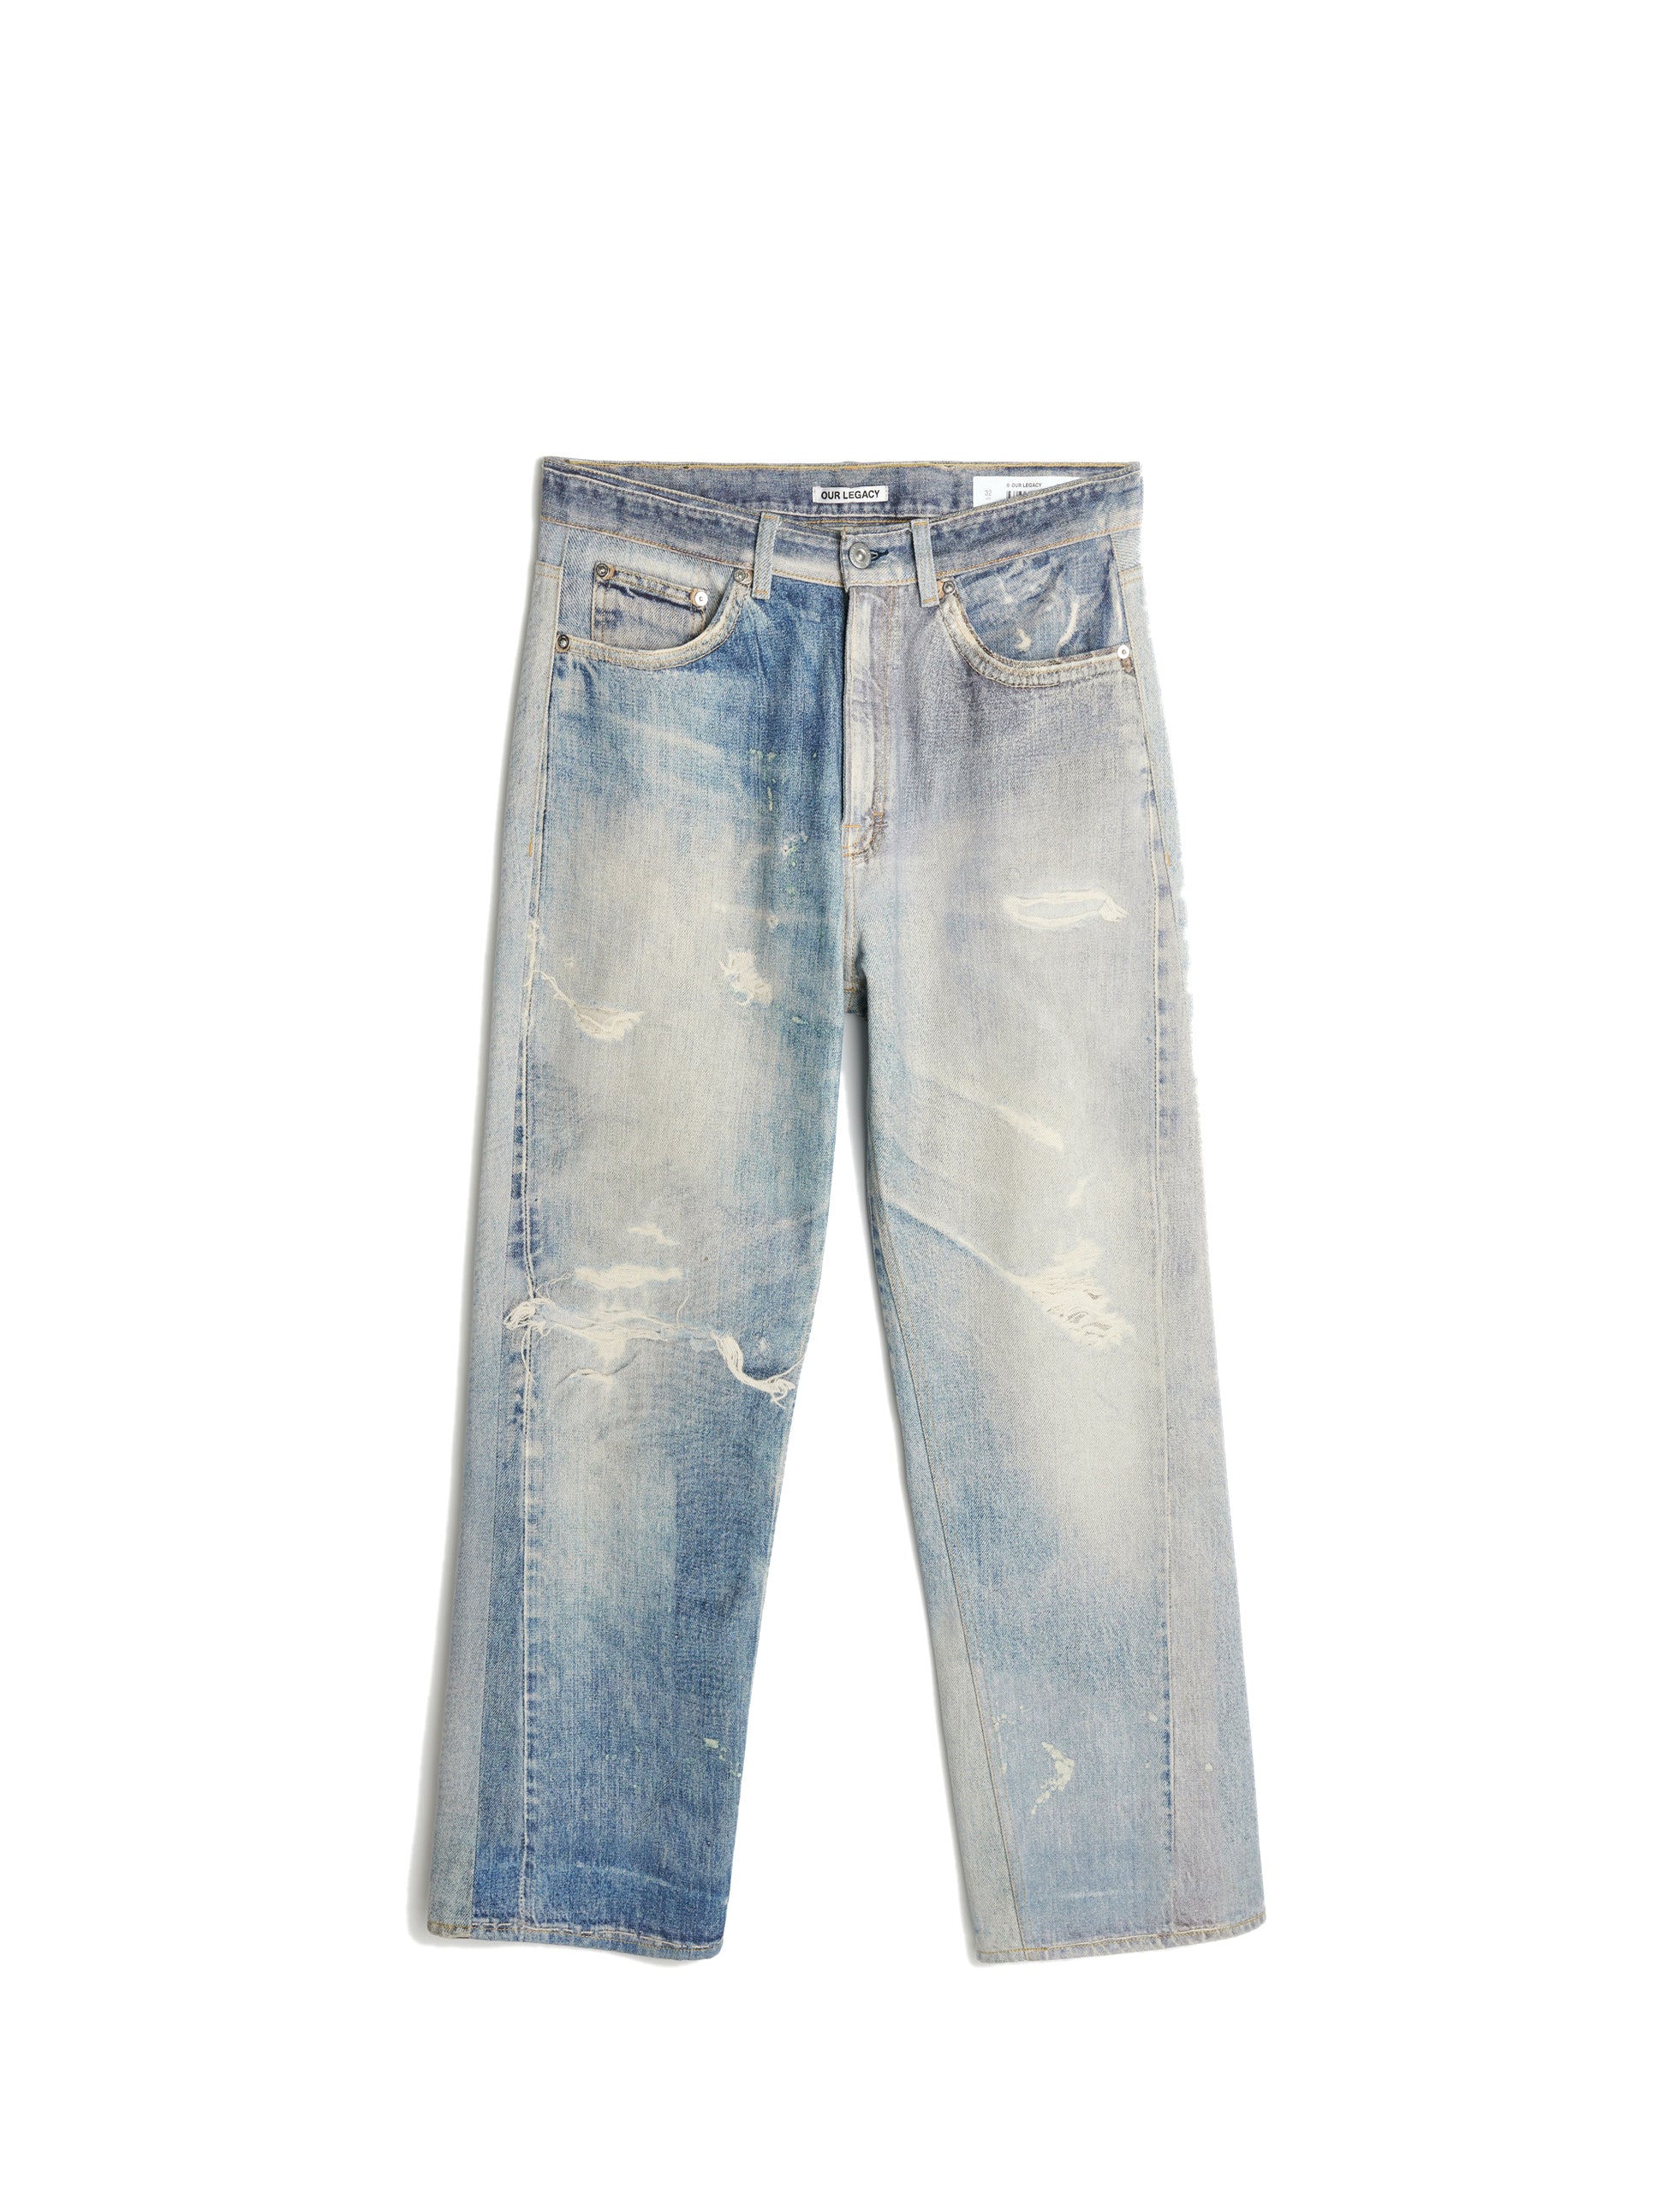 Blue Slim Ladies Boot Cut Jeans at Rs 350/piece in Jaipur | ID: 15177787662